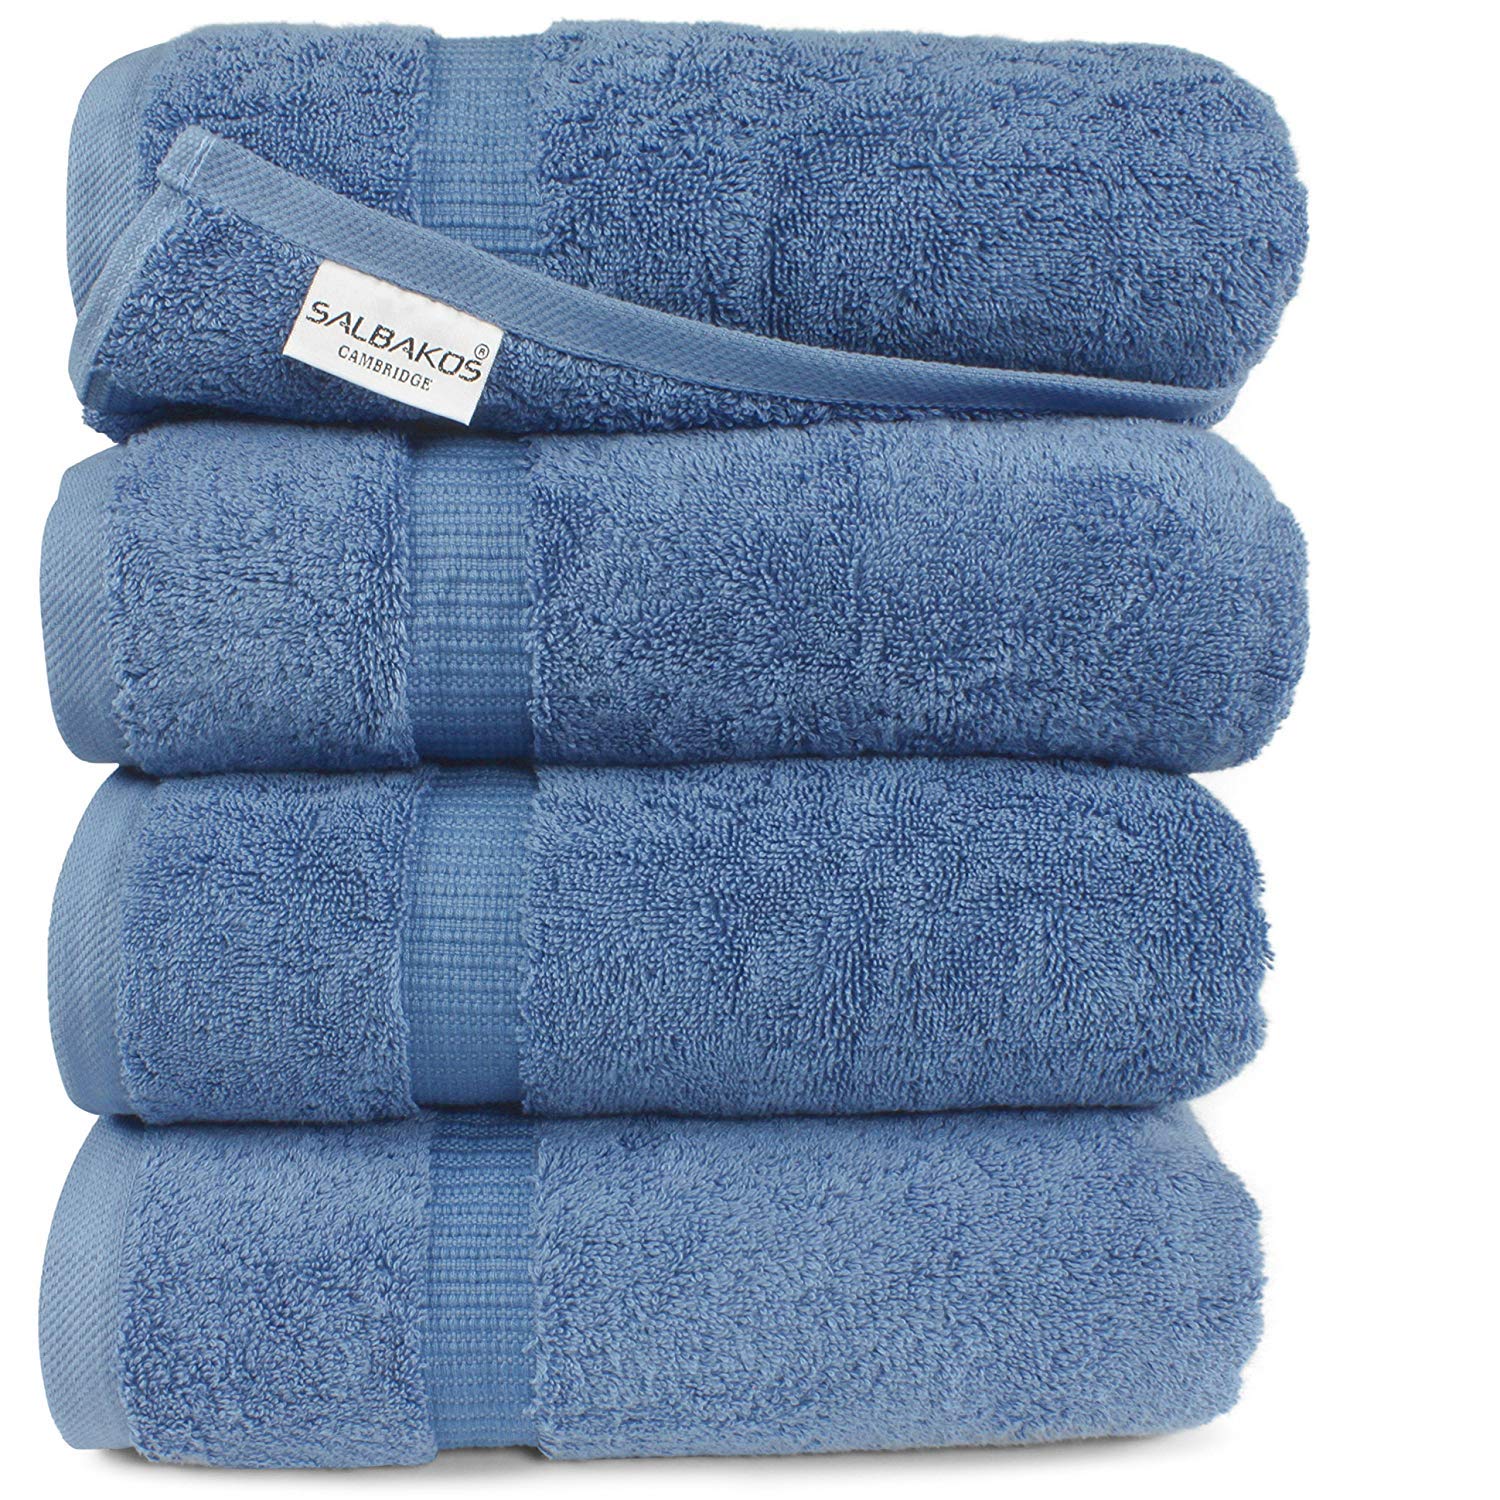 SALBAKOS Fluffy Premium Bath Towels, 4-Piece